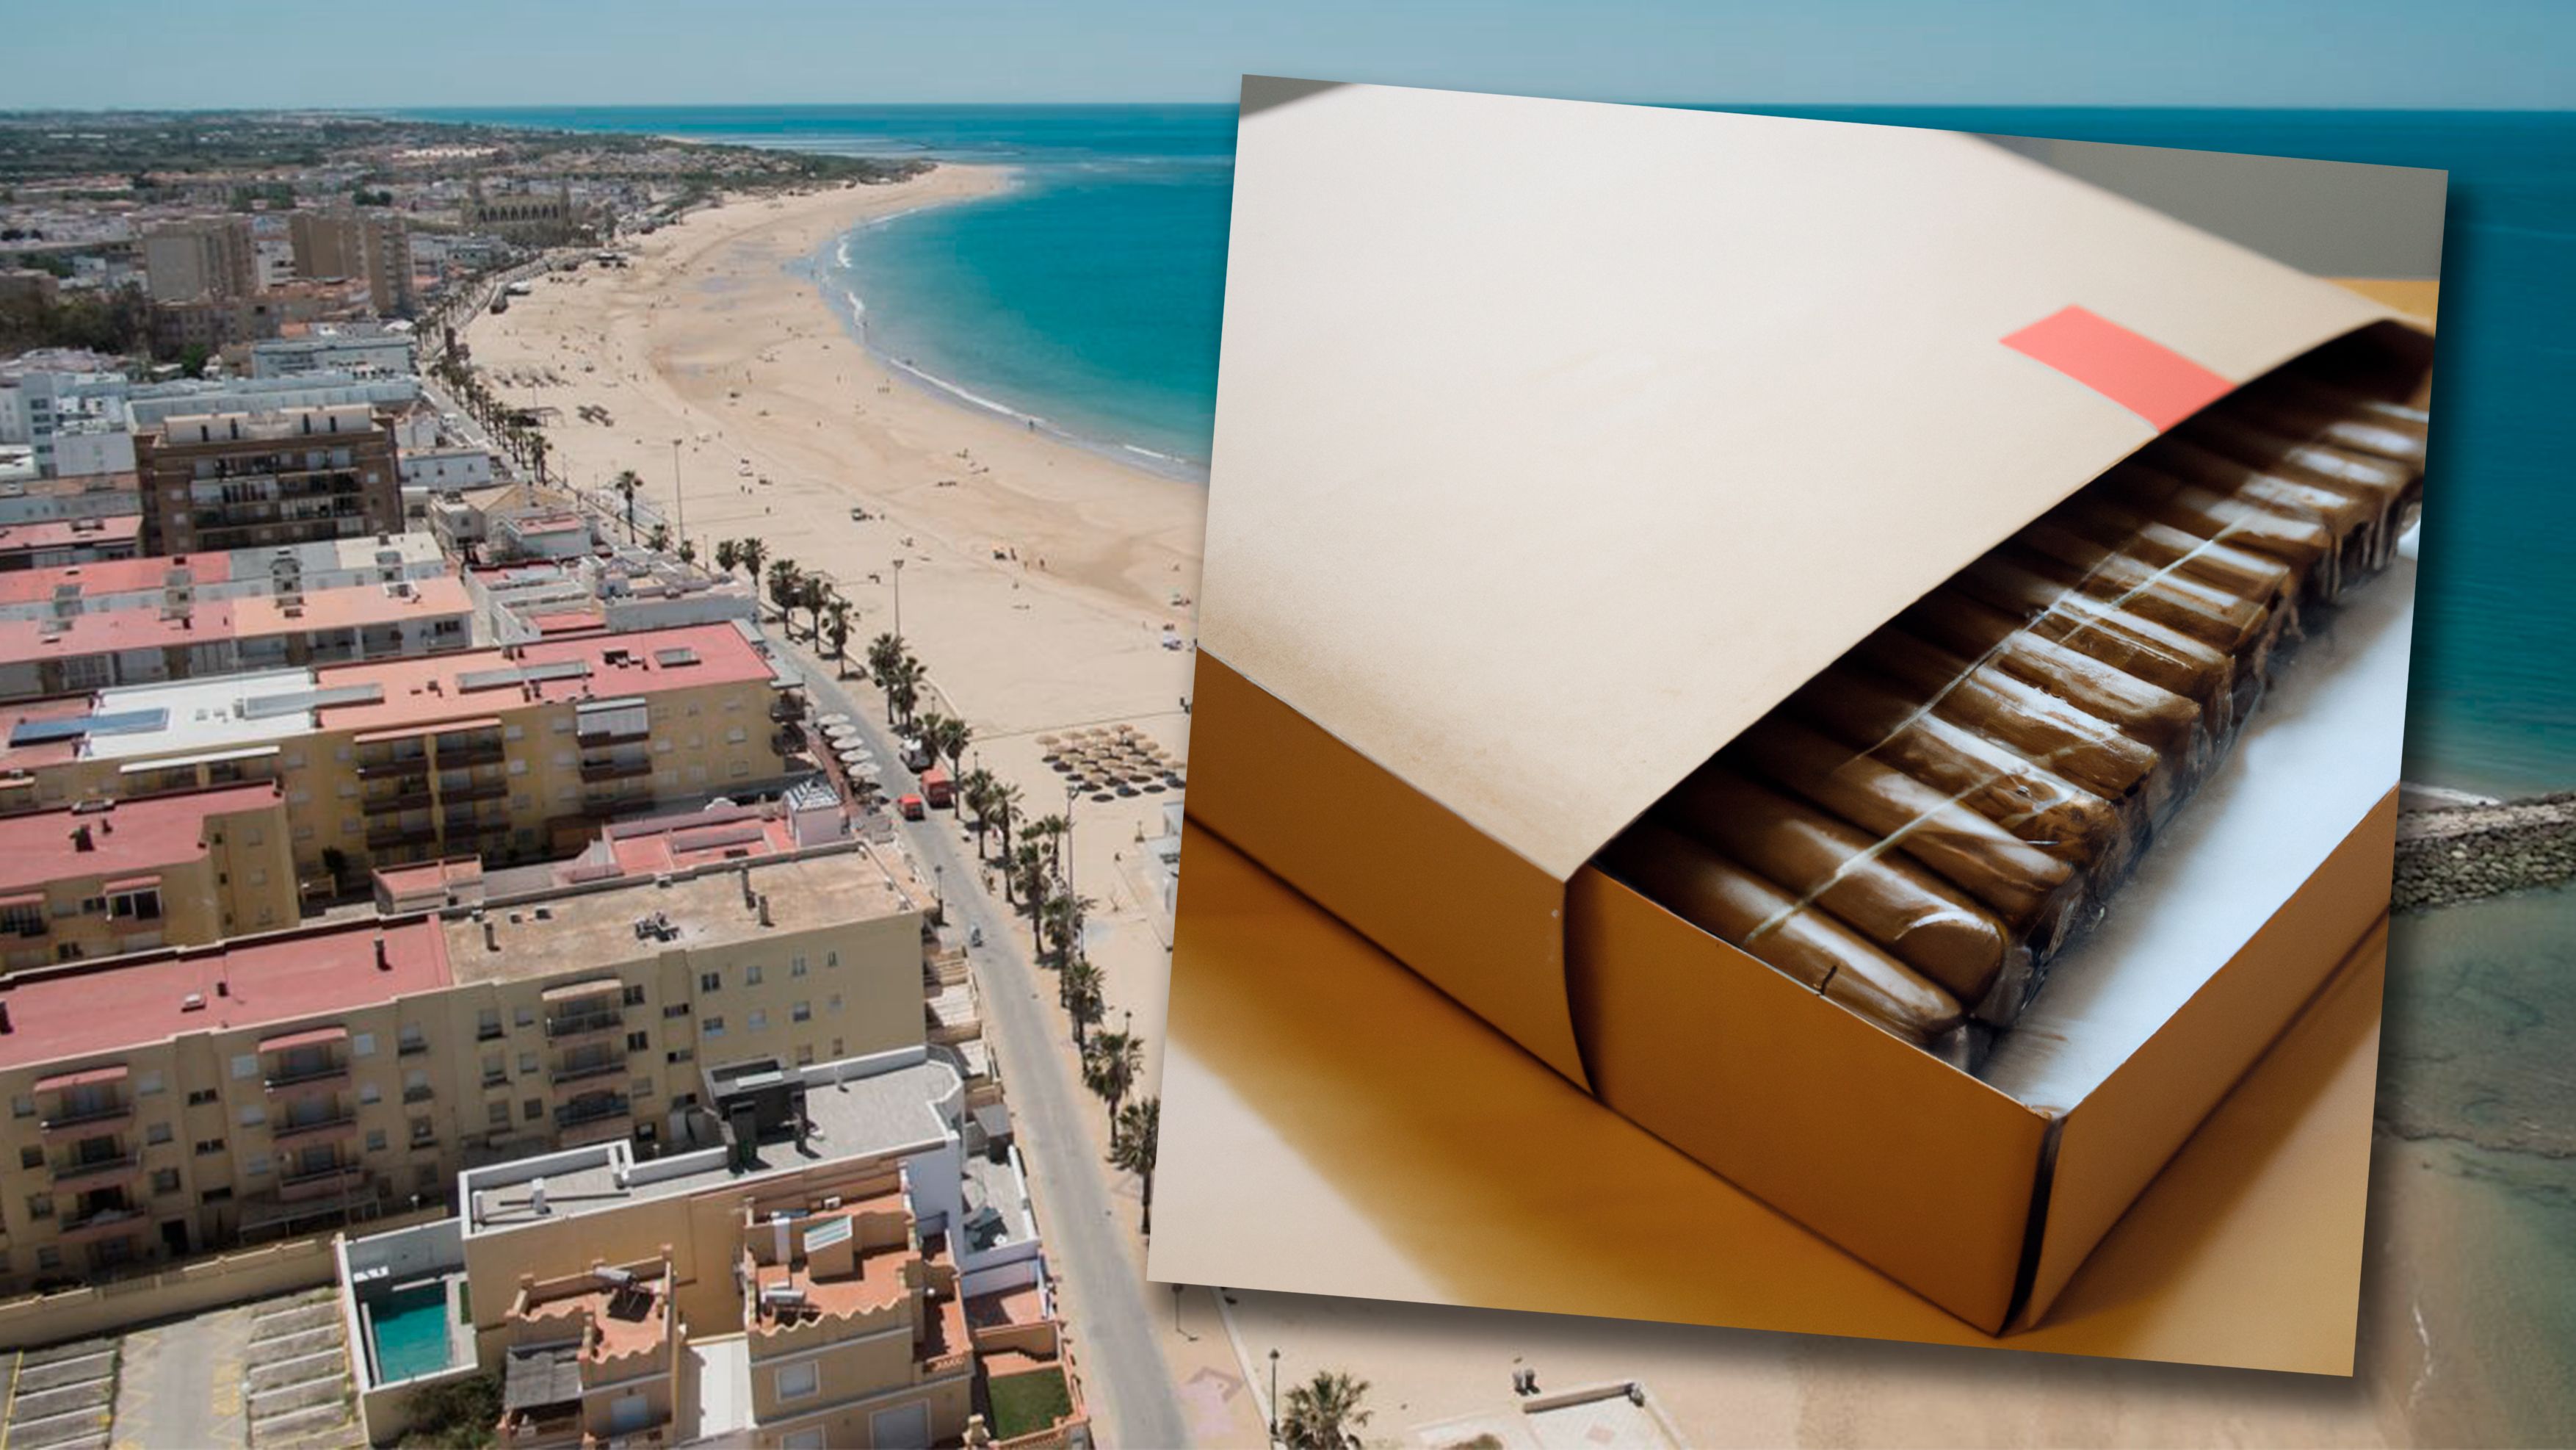 Una caja de puros explosiva enviada por Seur de Jerez a Chipiona: "Paga malparido, este colombiano te la tiene jurada".